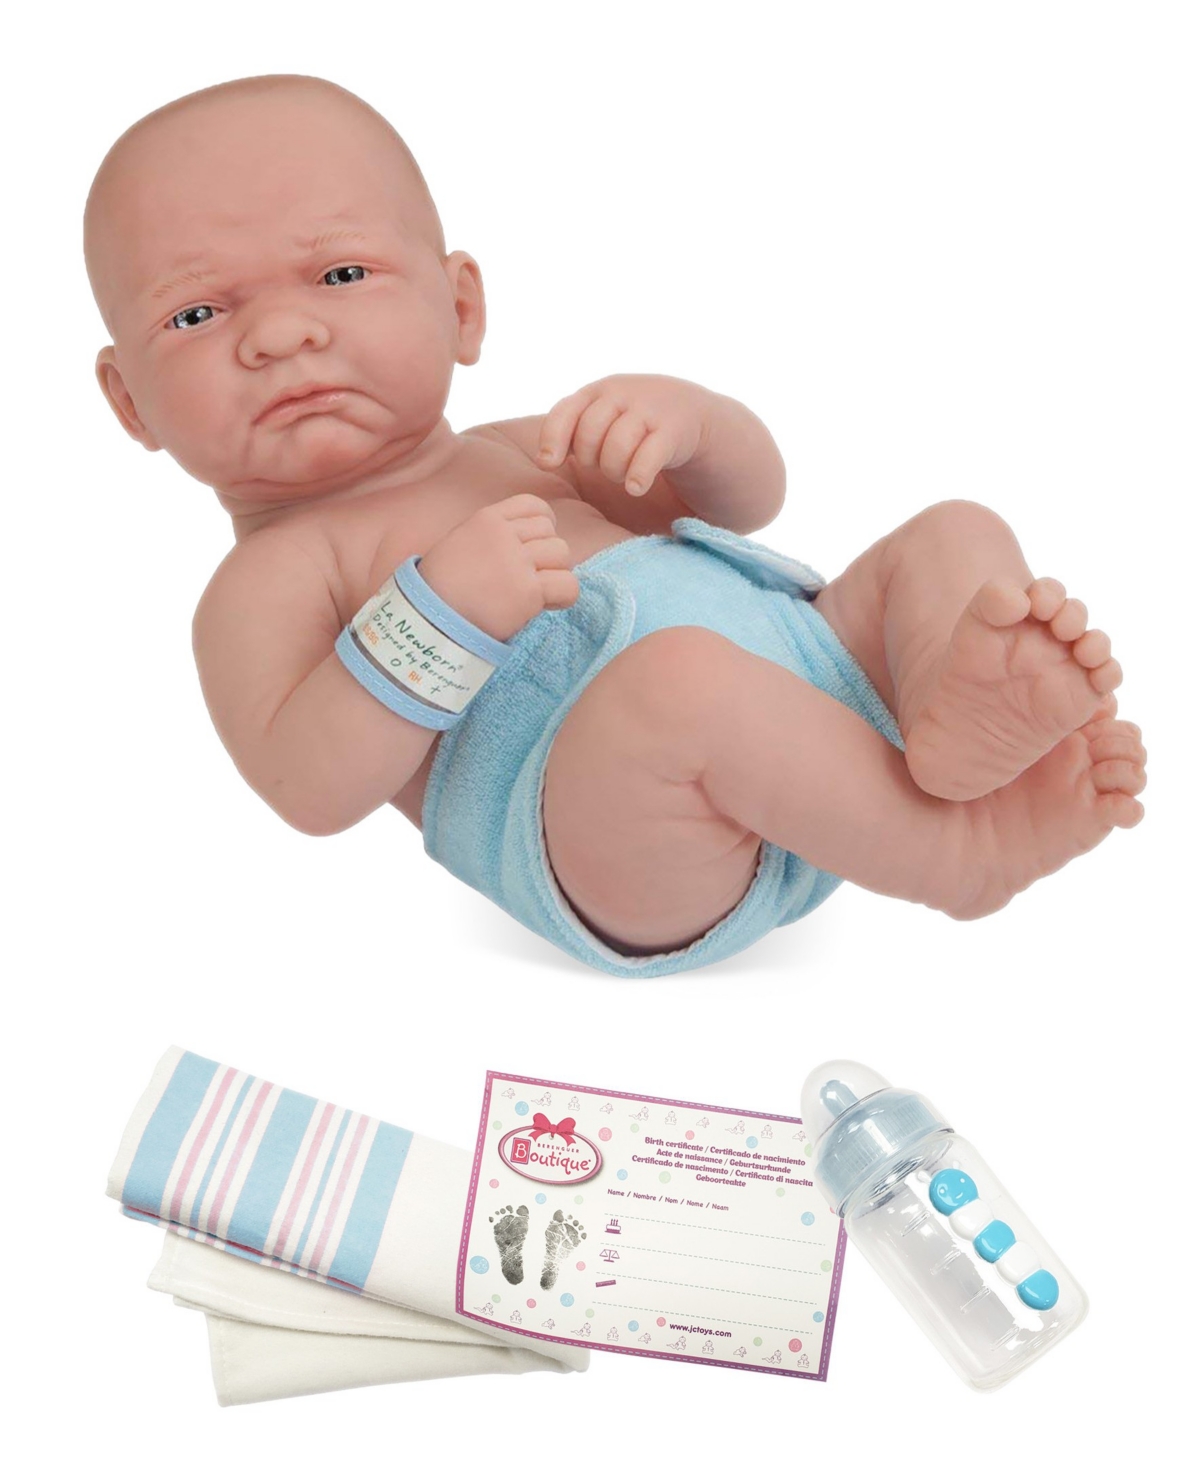 Jc Toys La Newborn First Day 14" Real Boy Baby Doll In First Day Boy - Blue